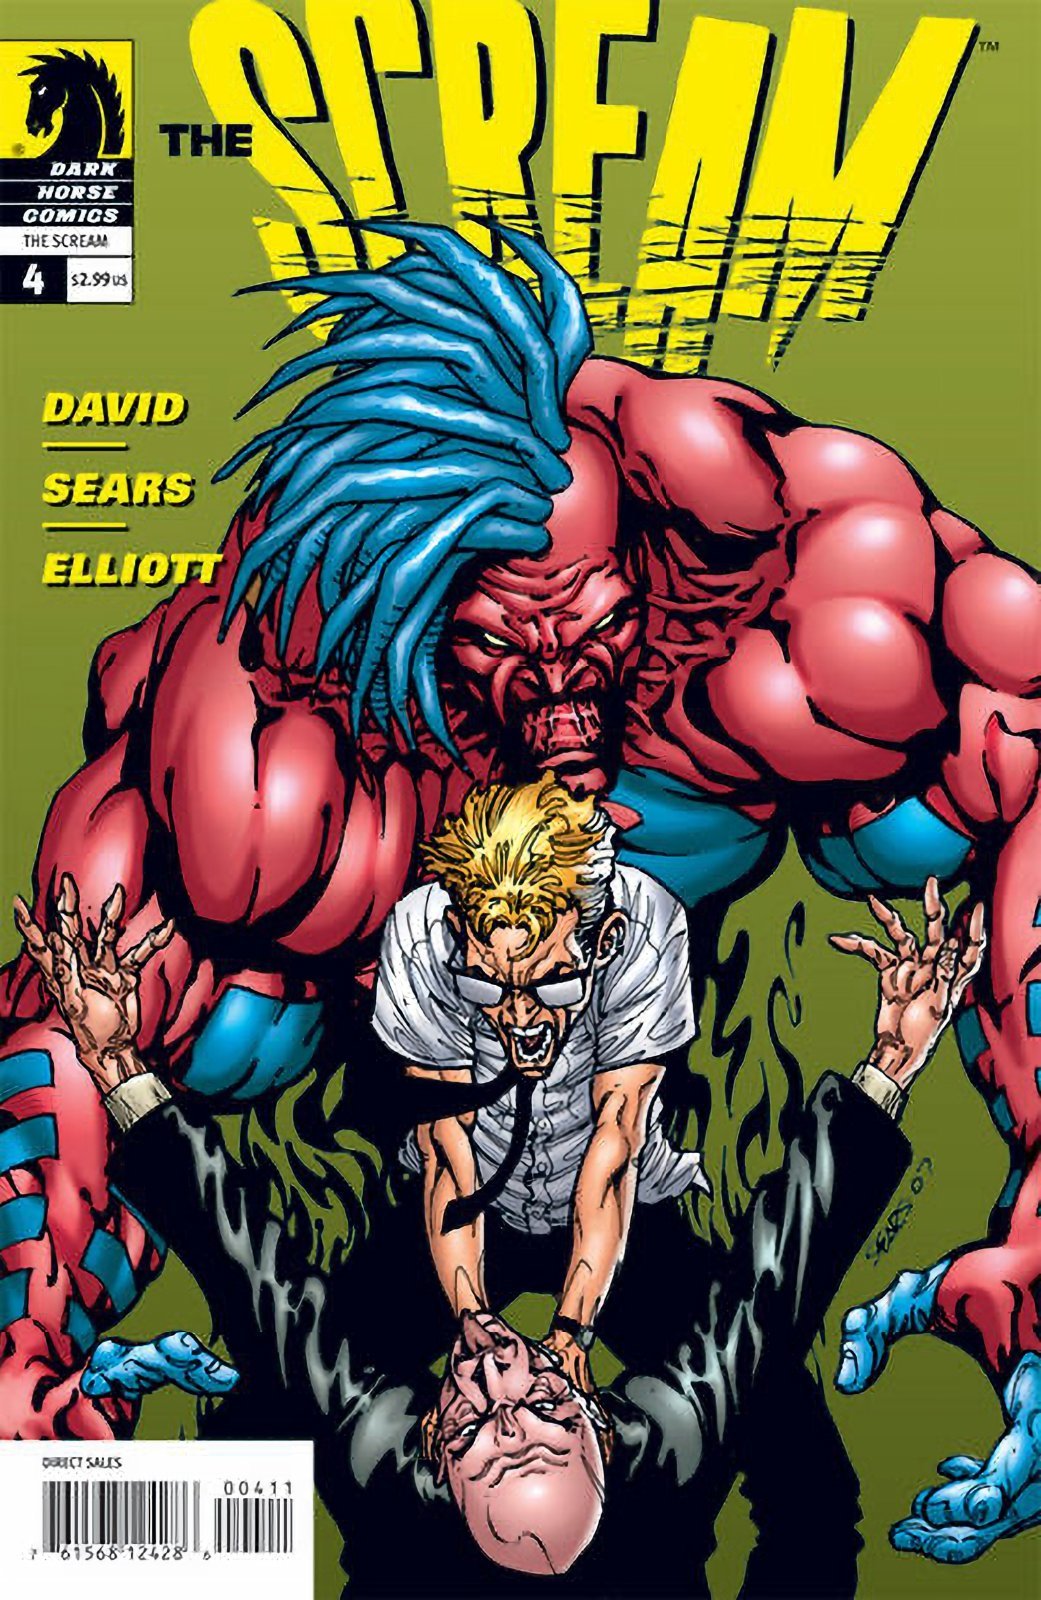 The Scream #4 (2007-2008) Dark Horse Comics